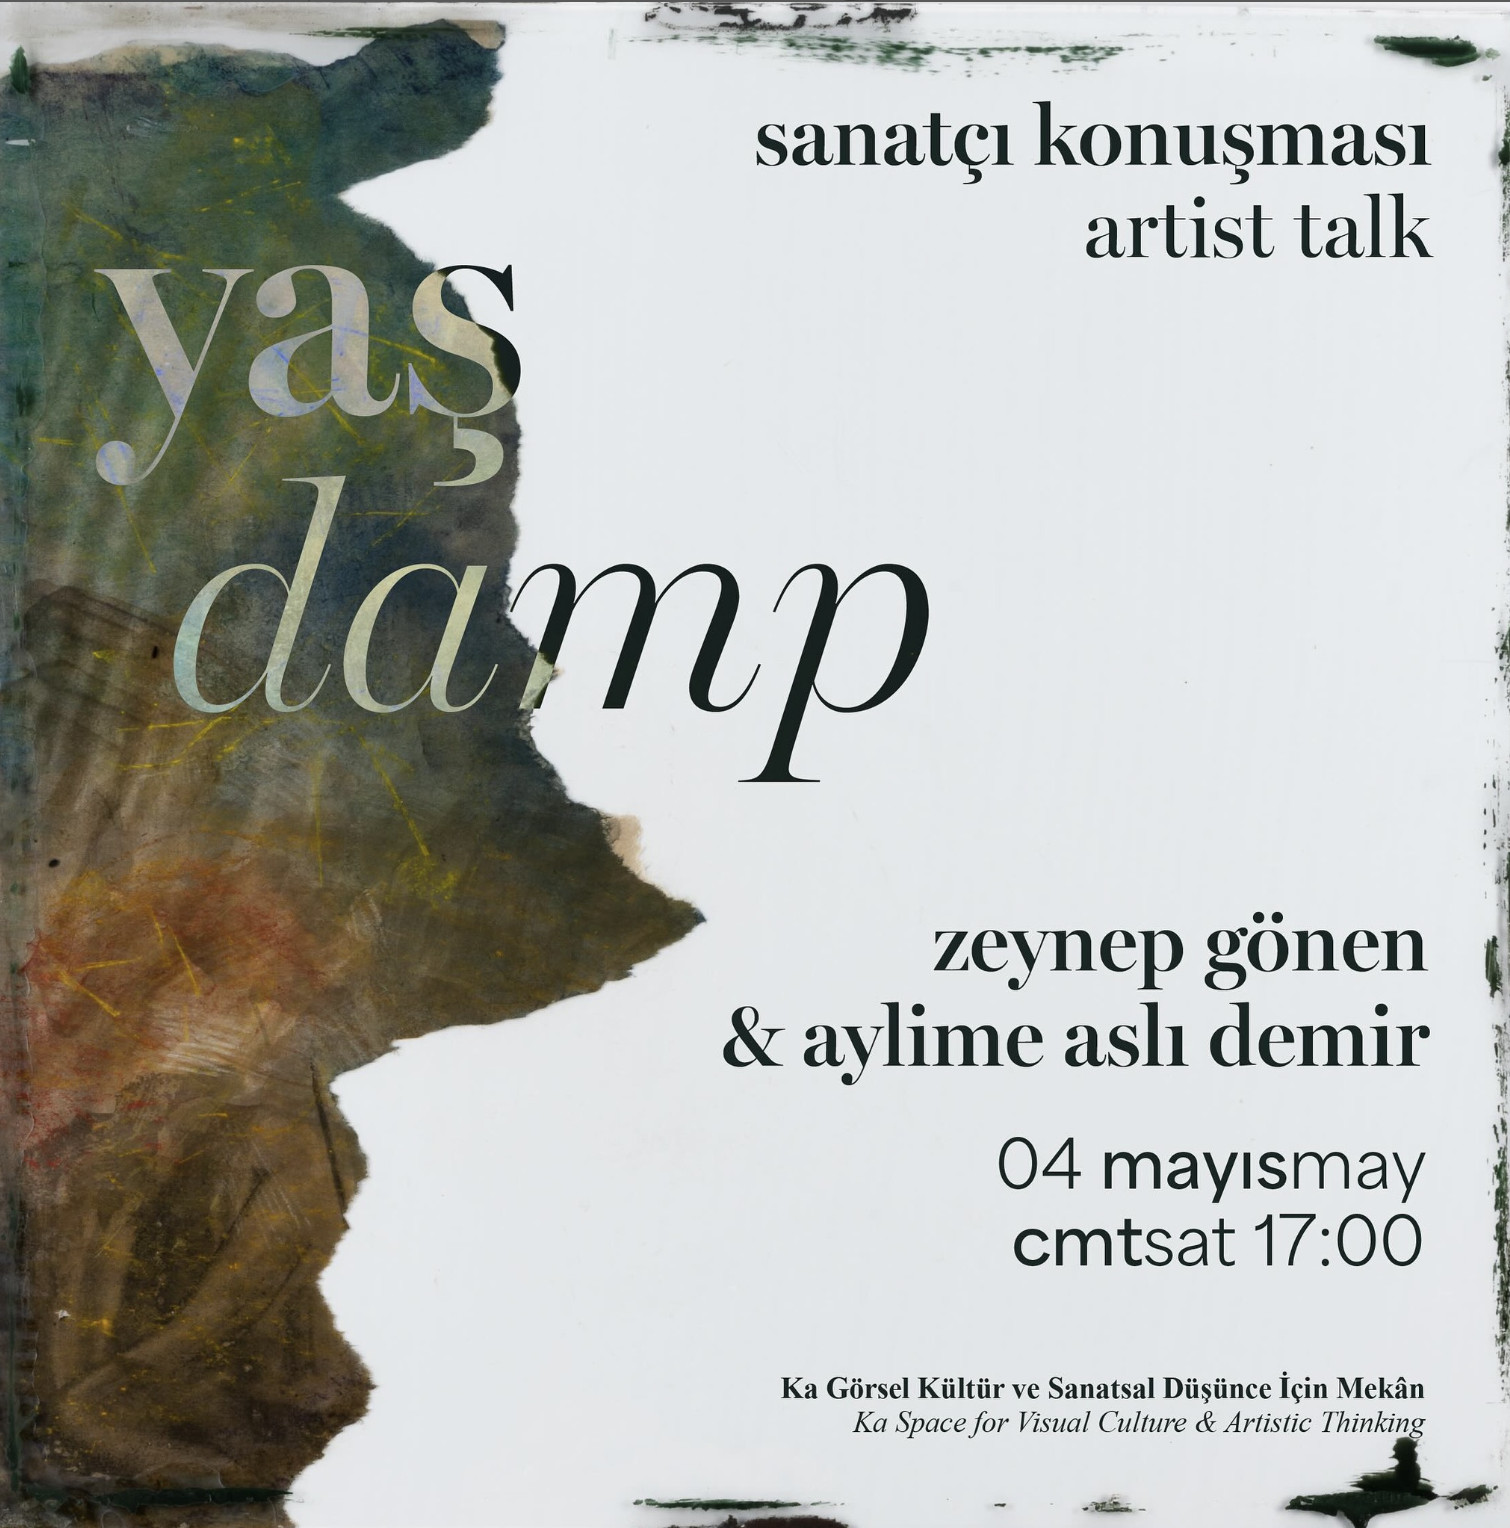 Zeynep Gönen’s “Damp” exhibition closing set for tomorrow | Kaos GL - News Portal for LGBTI+ News